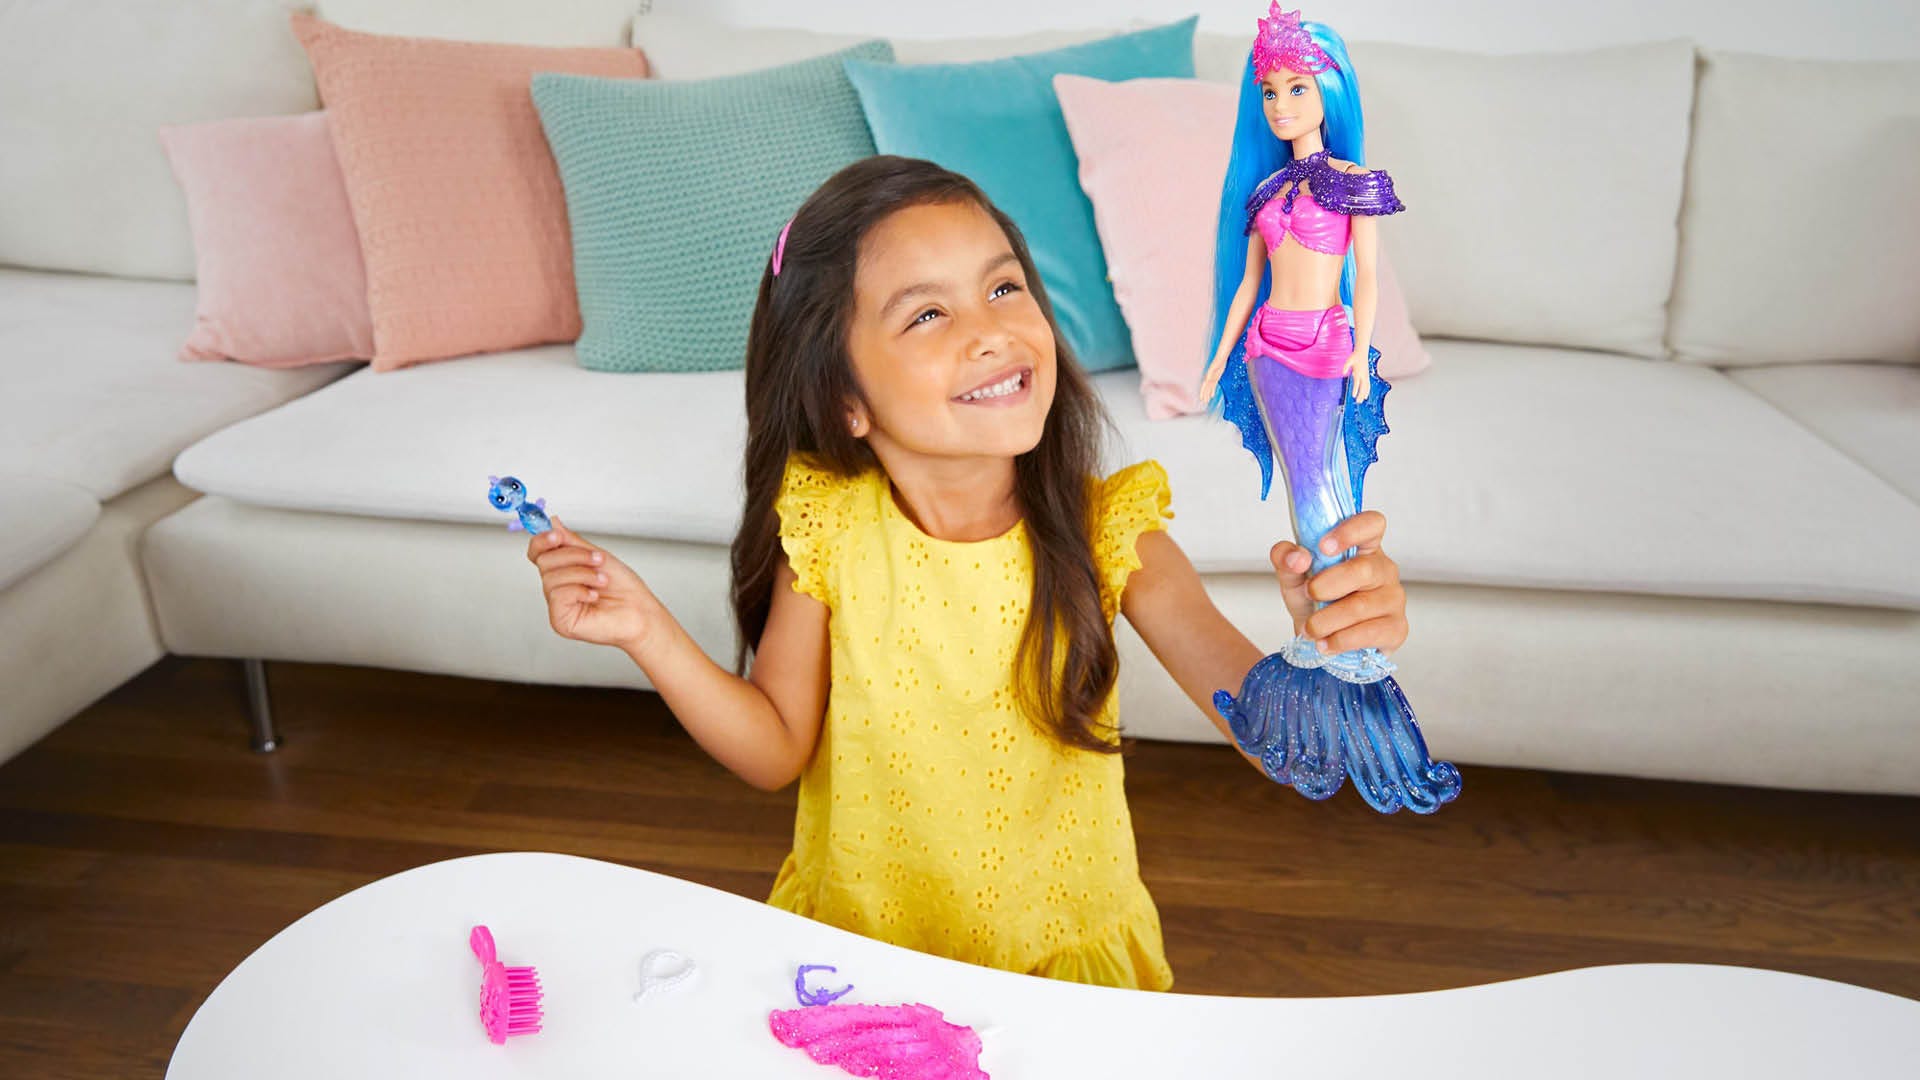 A “Barbie Mermaid Power” doll, Mattel